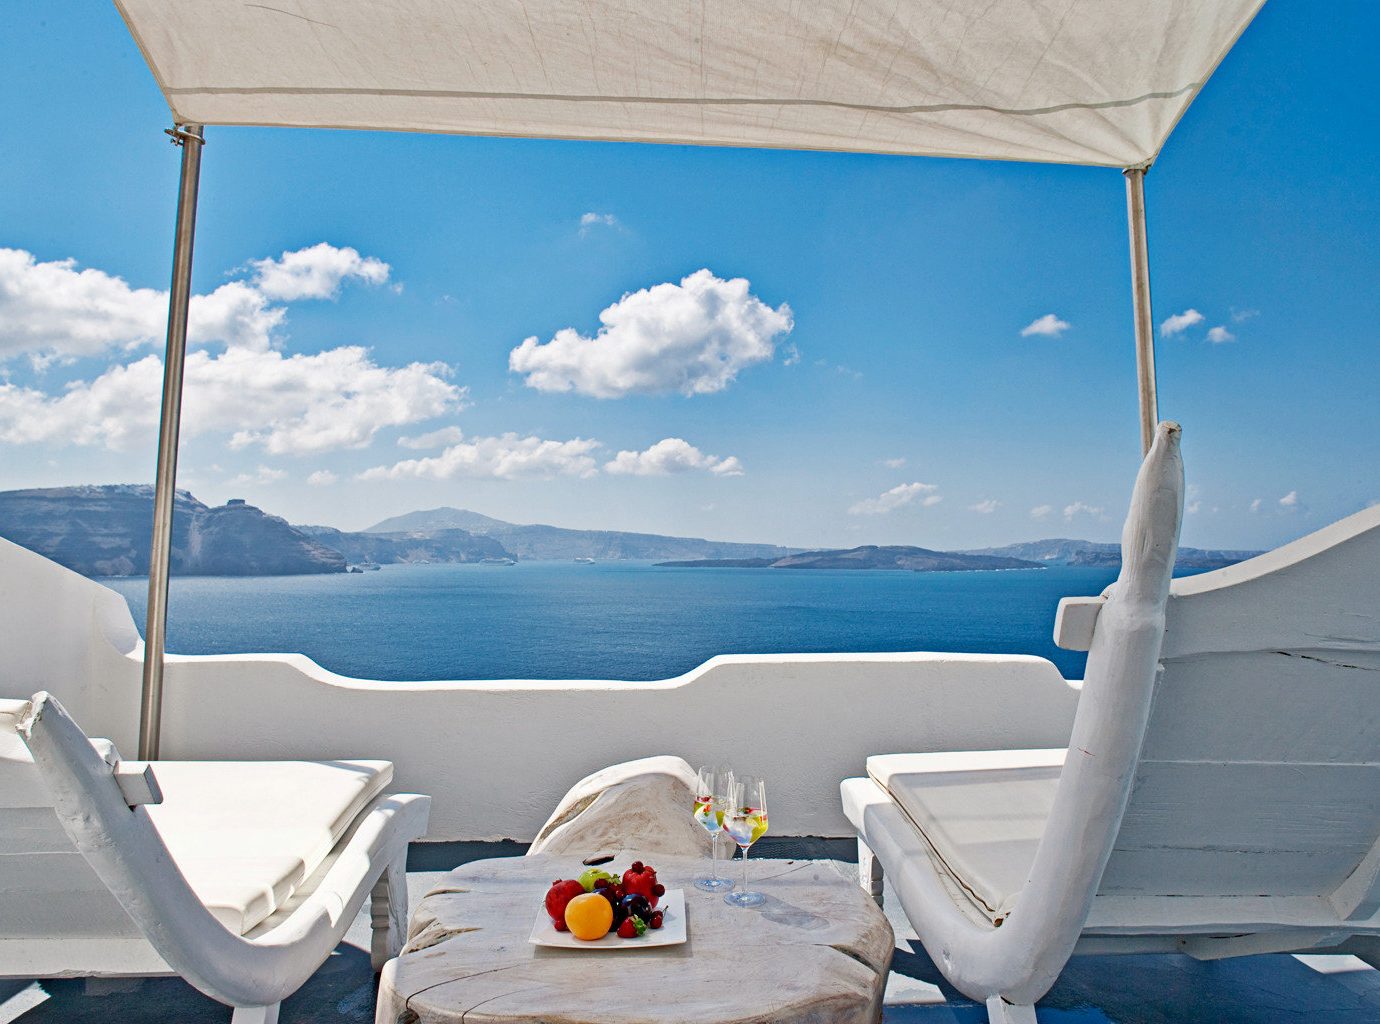 Balcony Bedroom Classic Elegant Hotels Island Luxury Romantic Scenic views Trip Ideas Waterfront sky blue Sea wind day